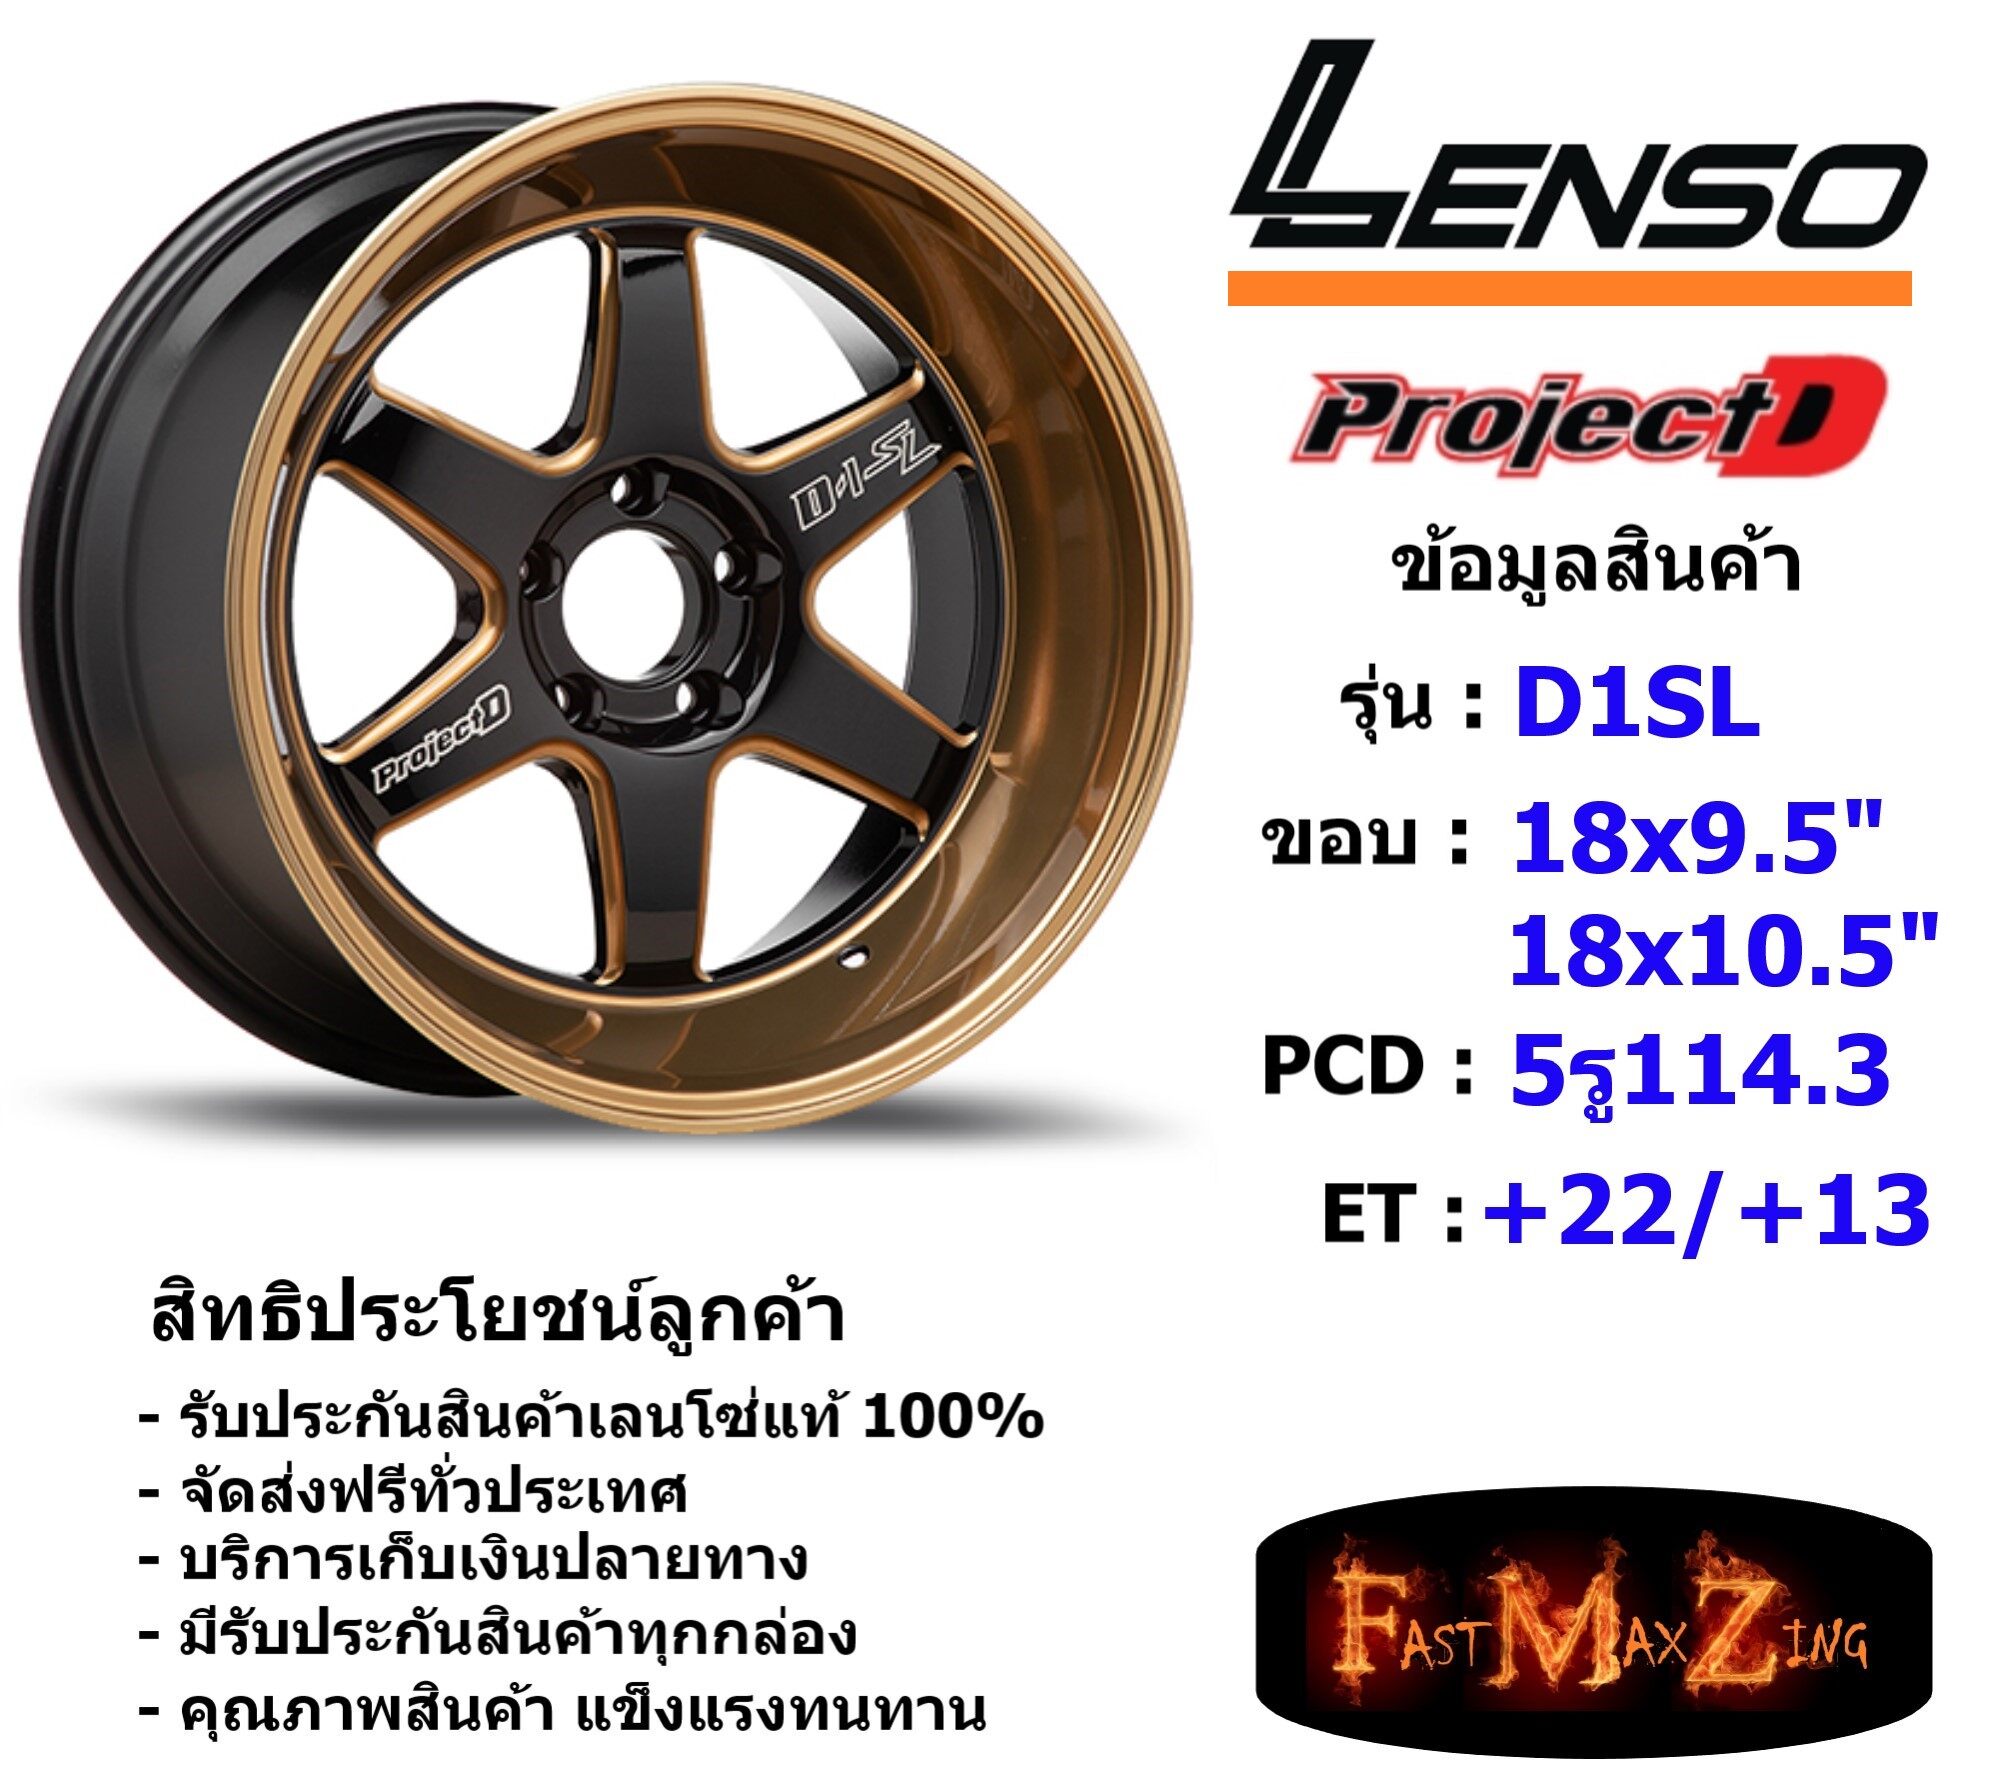 Lenso Wheel ProjectD D1SL ขอบ 18x9.5/10.5 5รู114.3 ET+22/+13 สีBWMAC แม็กเลนโซ่ ล้อแม็ก เลนโซ่ lenso18 แม็กรถยนต์ขอบ18